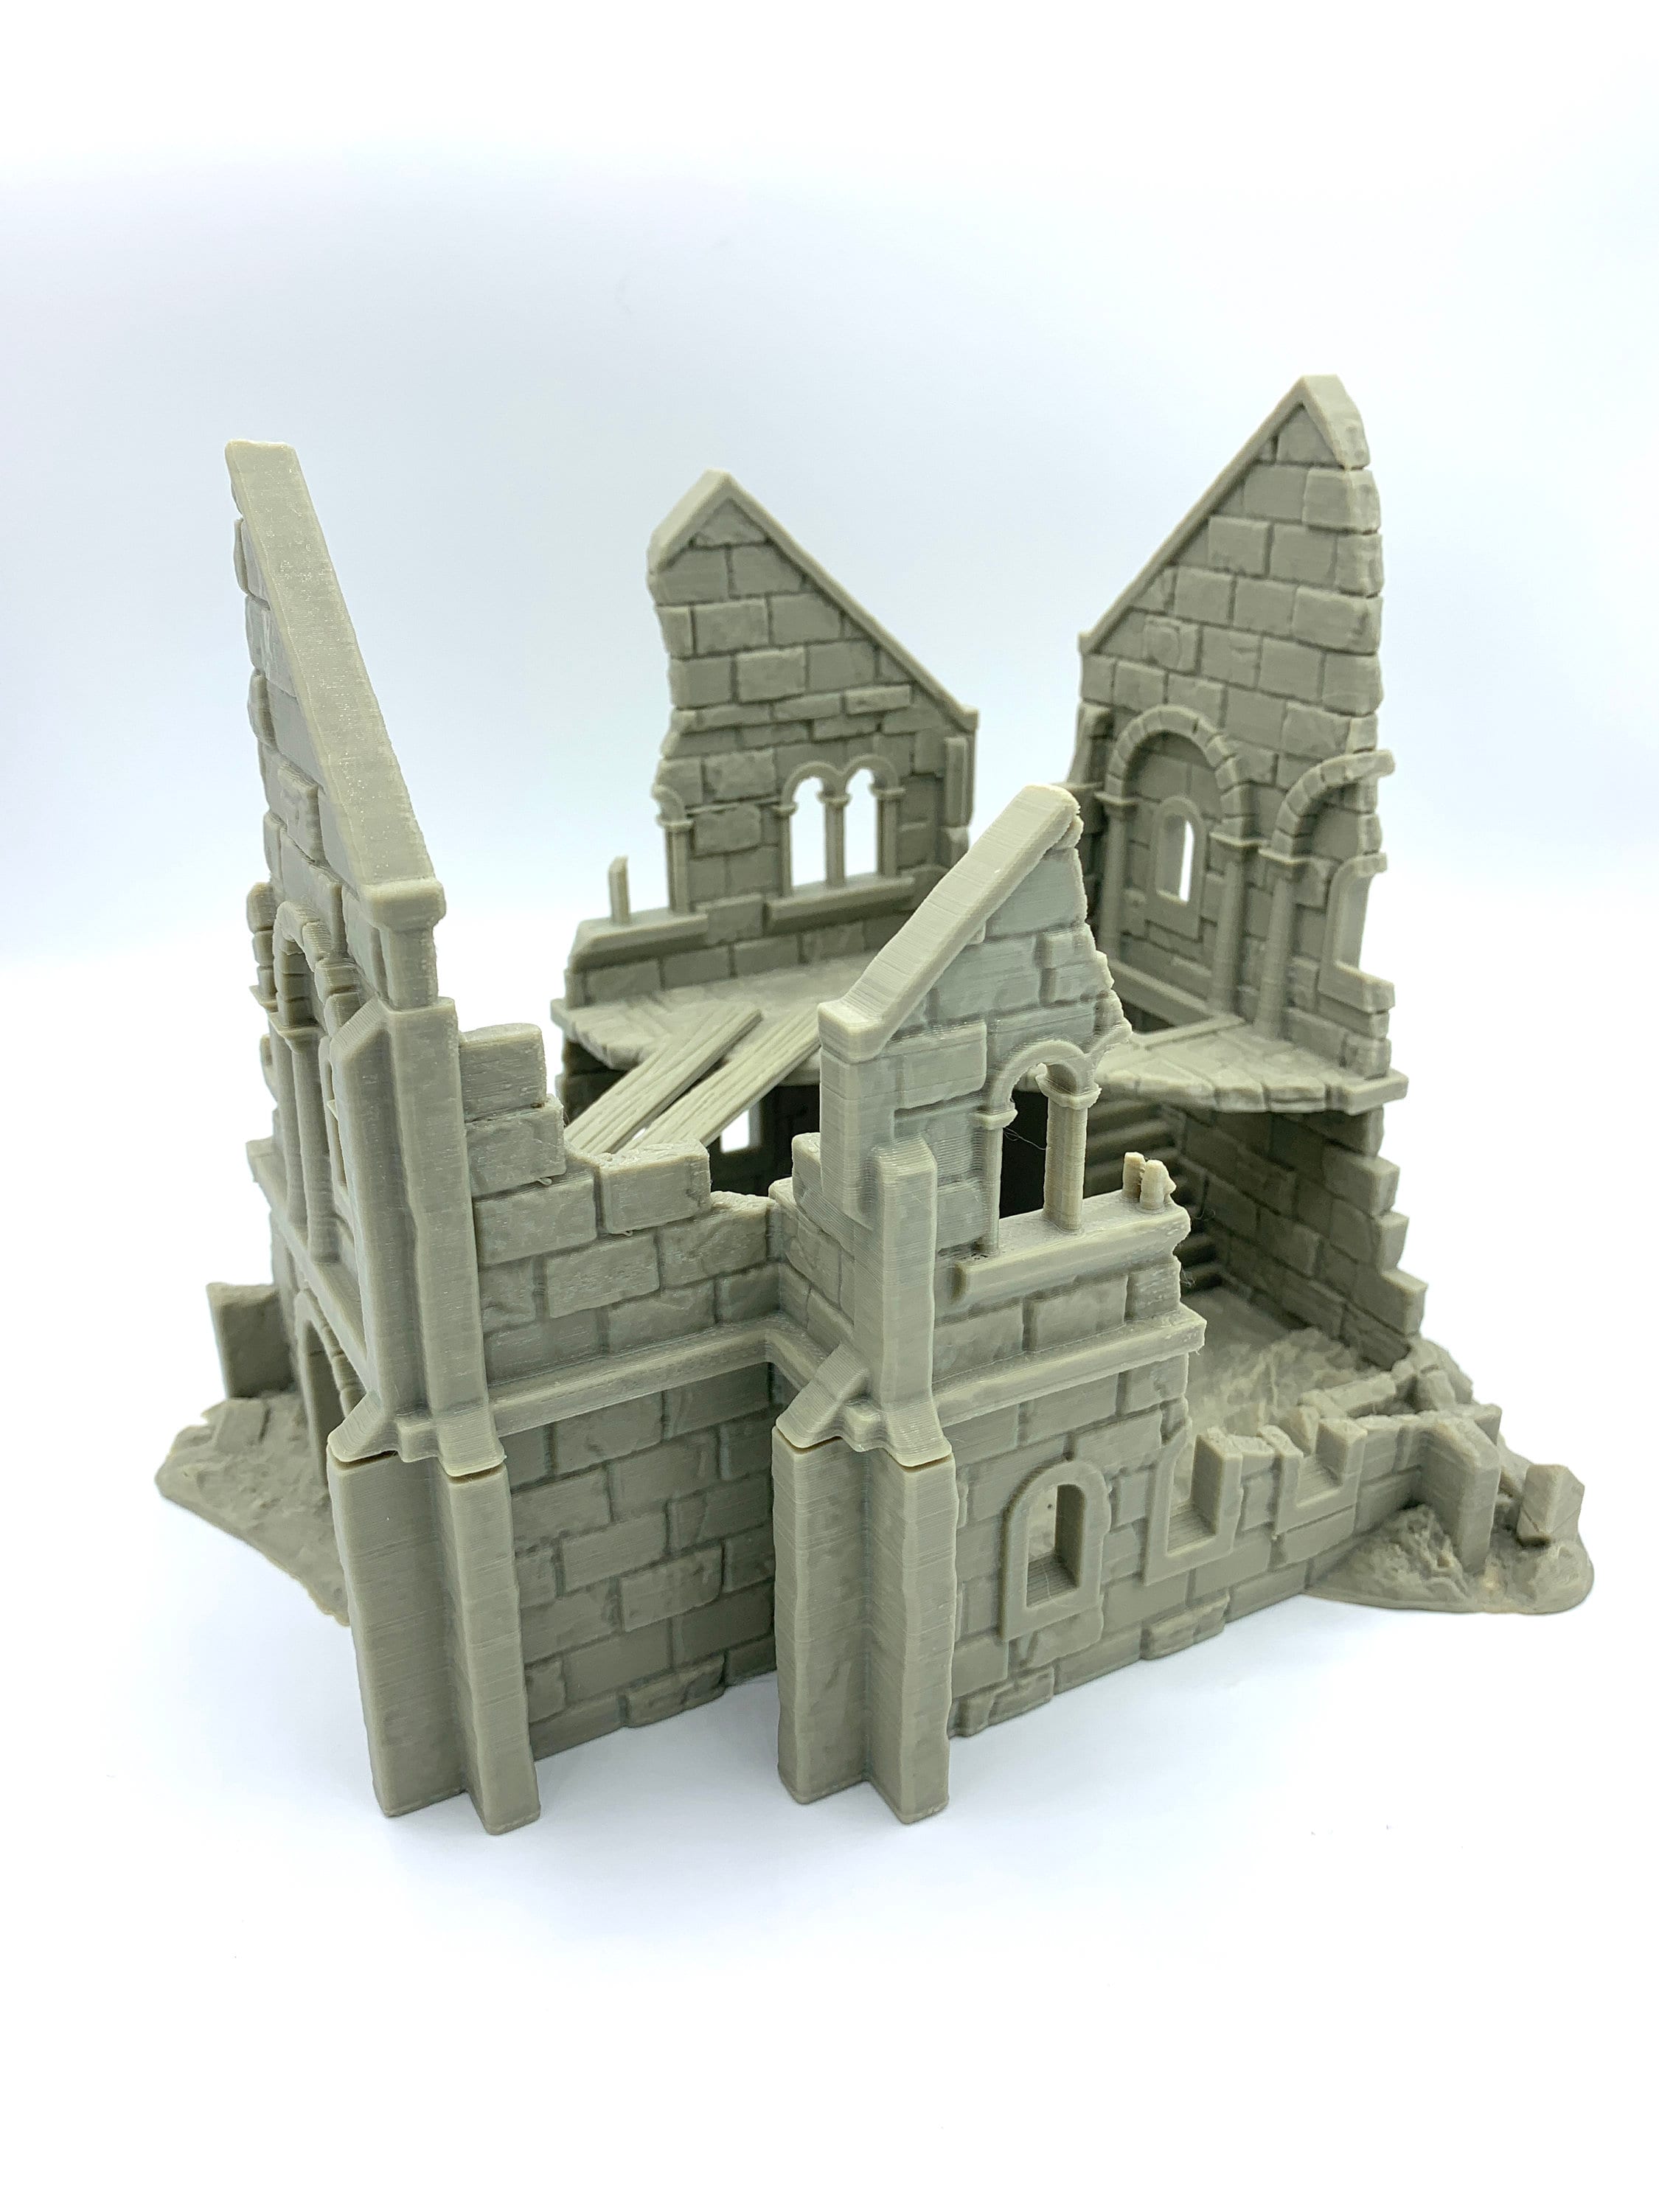 Arkenfel Ruined House 4 / Dark Realms Terrain / RPG and Wargame 3d Printed Tabletop Terrain / Licensed Printer